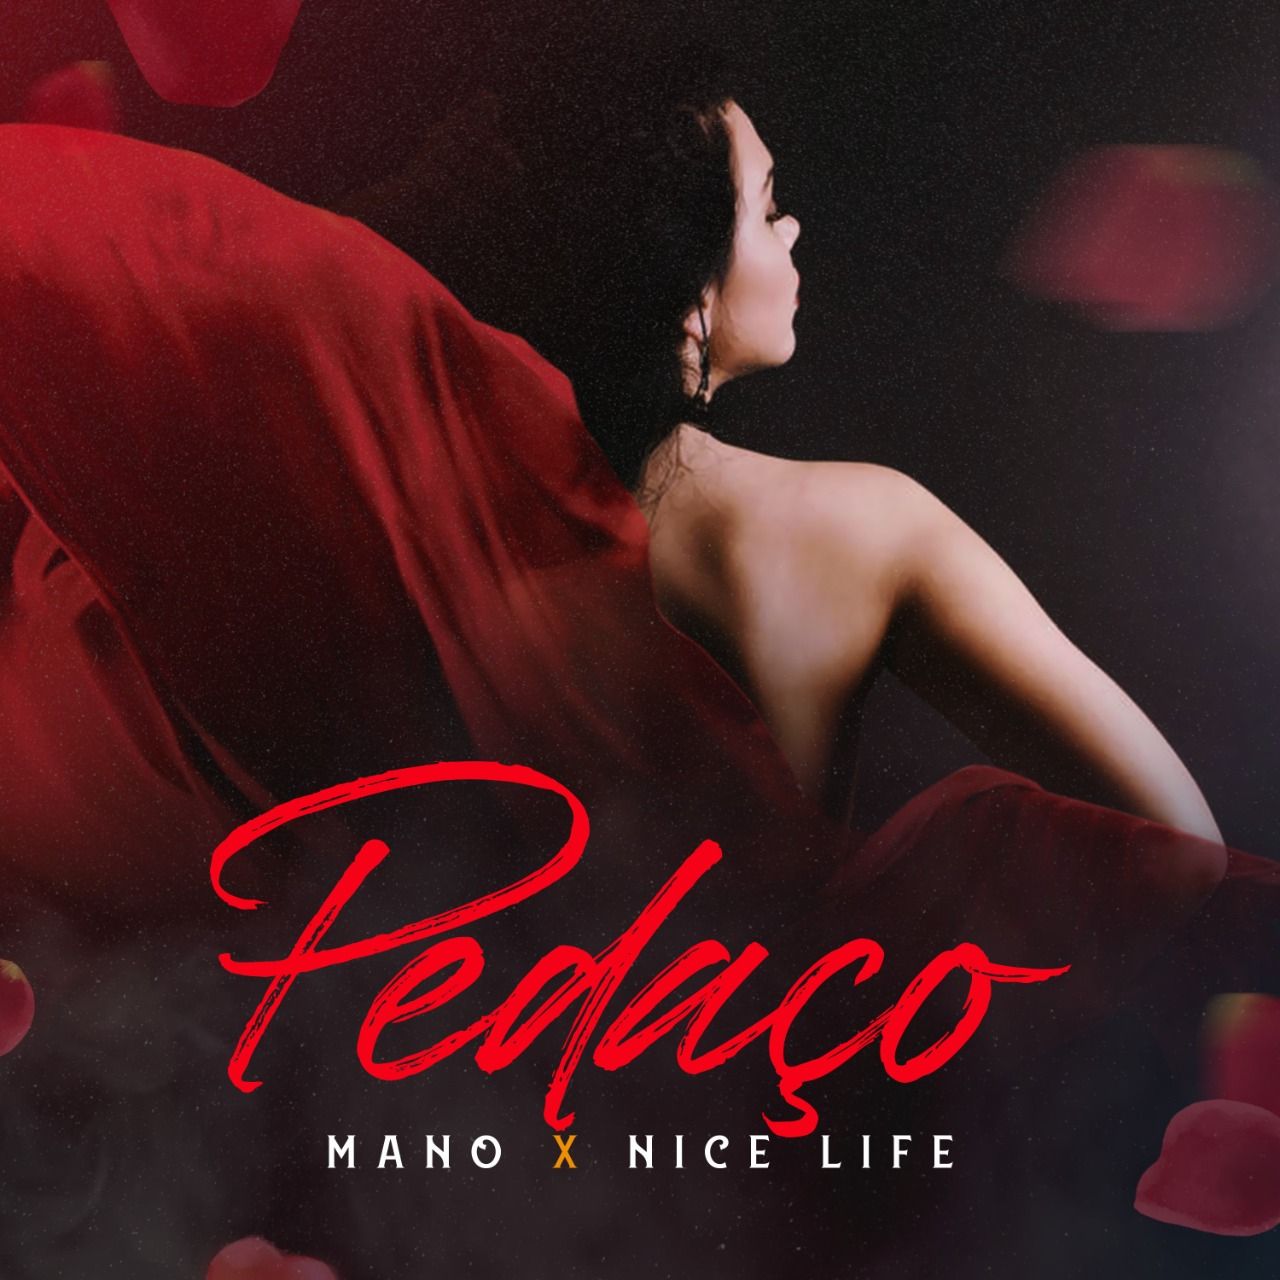 Eroflueden Mano X Nice Life - Pedaco